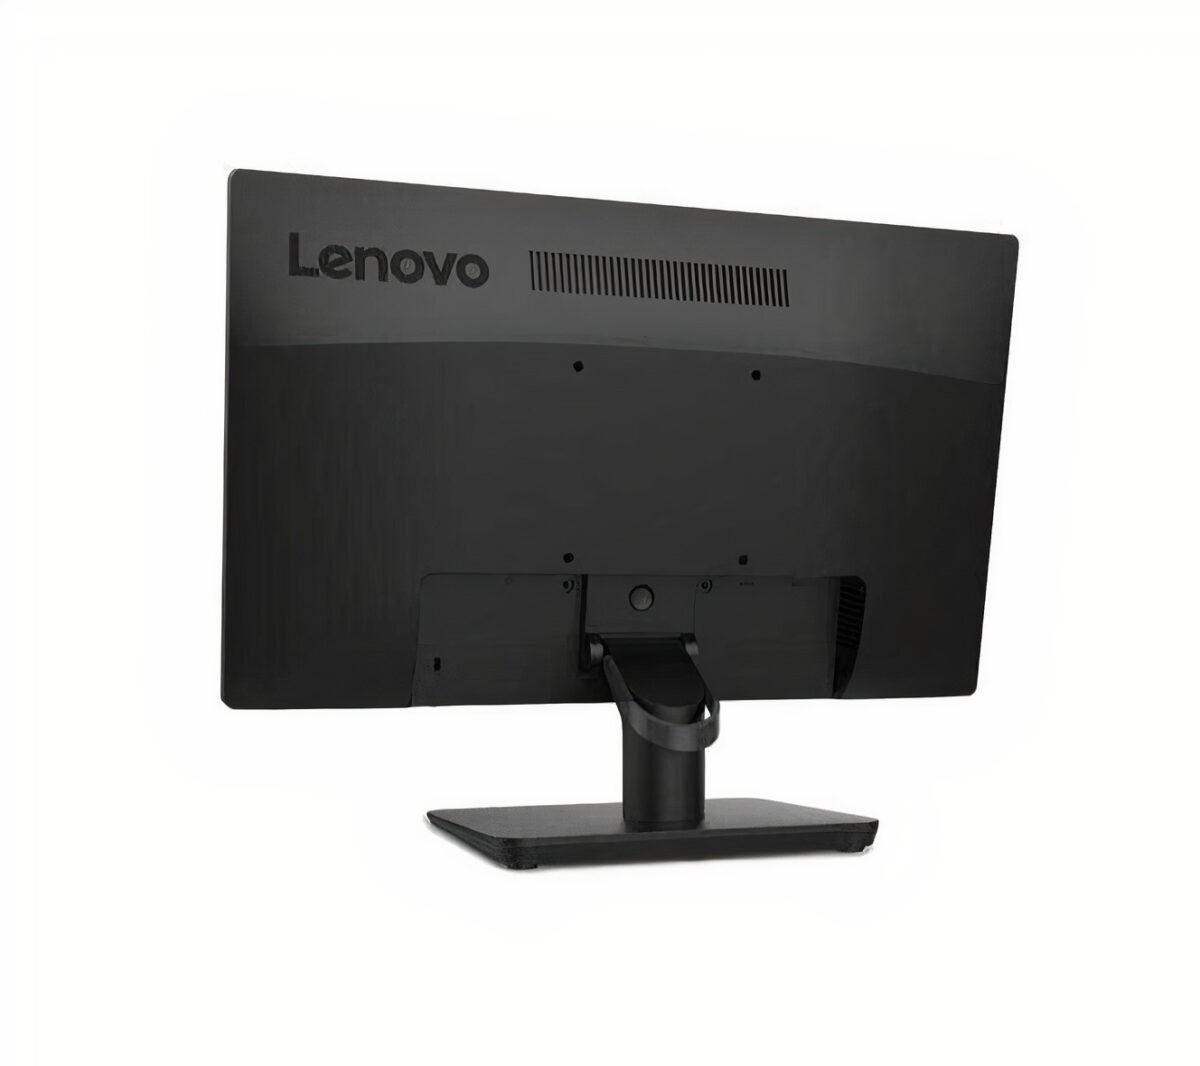 Lenovo D19-10 18.5” HD monitor